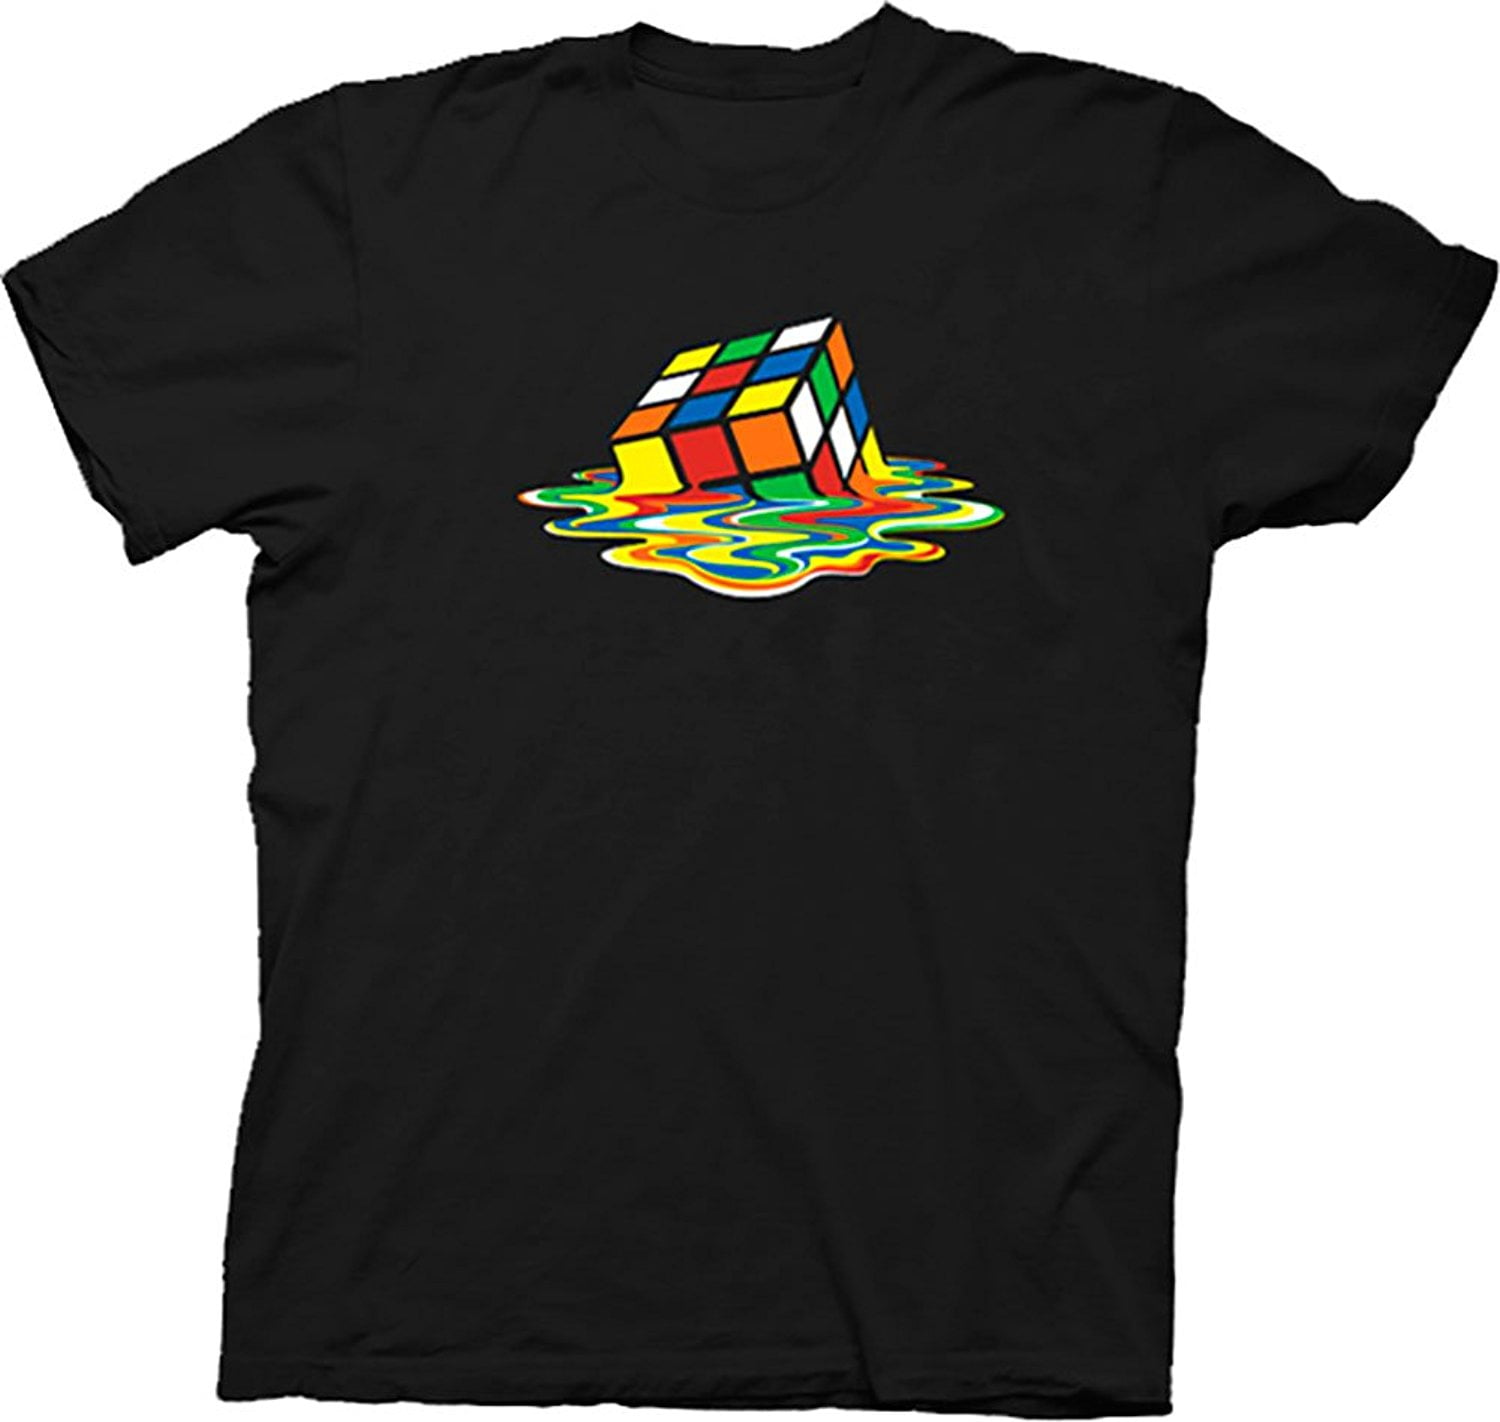 Get cold Luminance cement Rubik's Cube Melting Sheldon Cooper The Big Bang Theory Black T-shirt -  Walmart.com